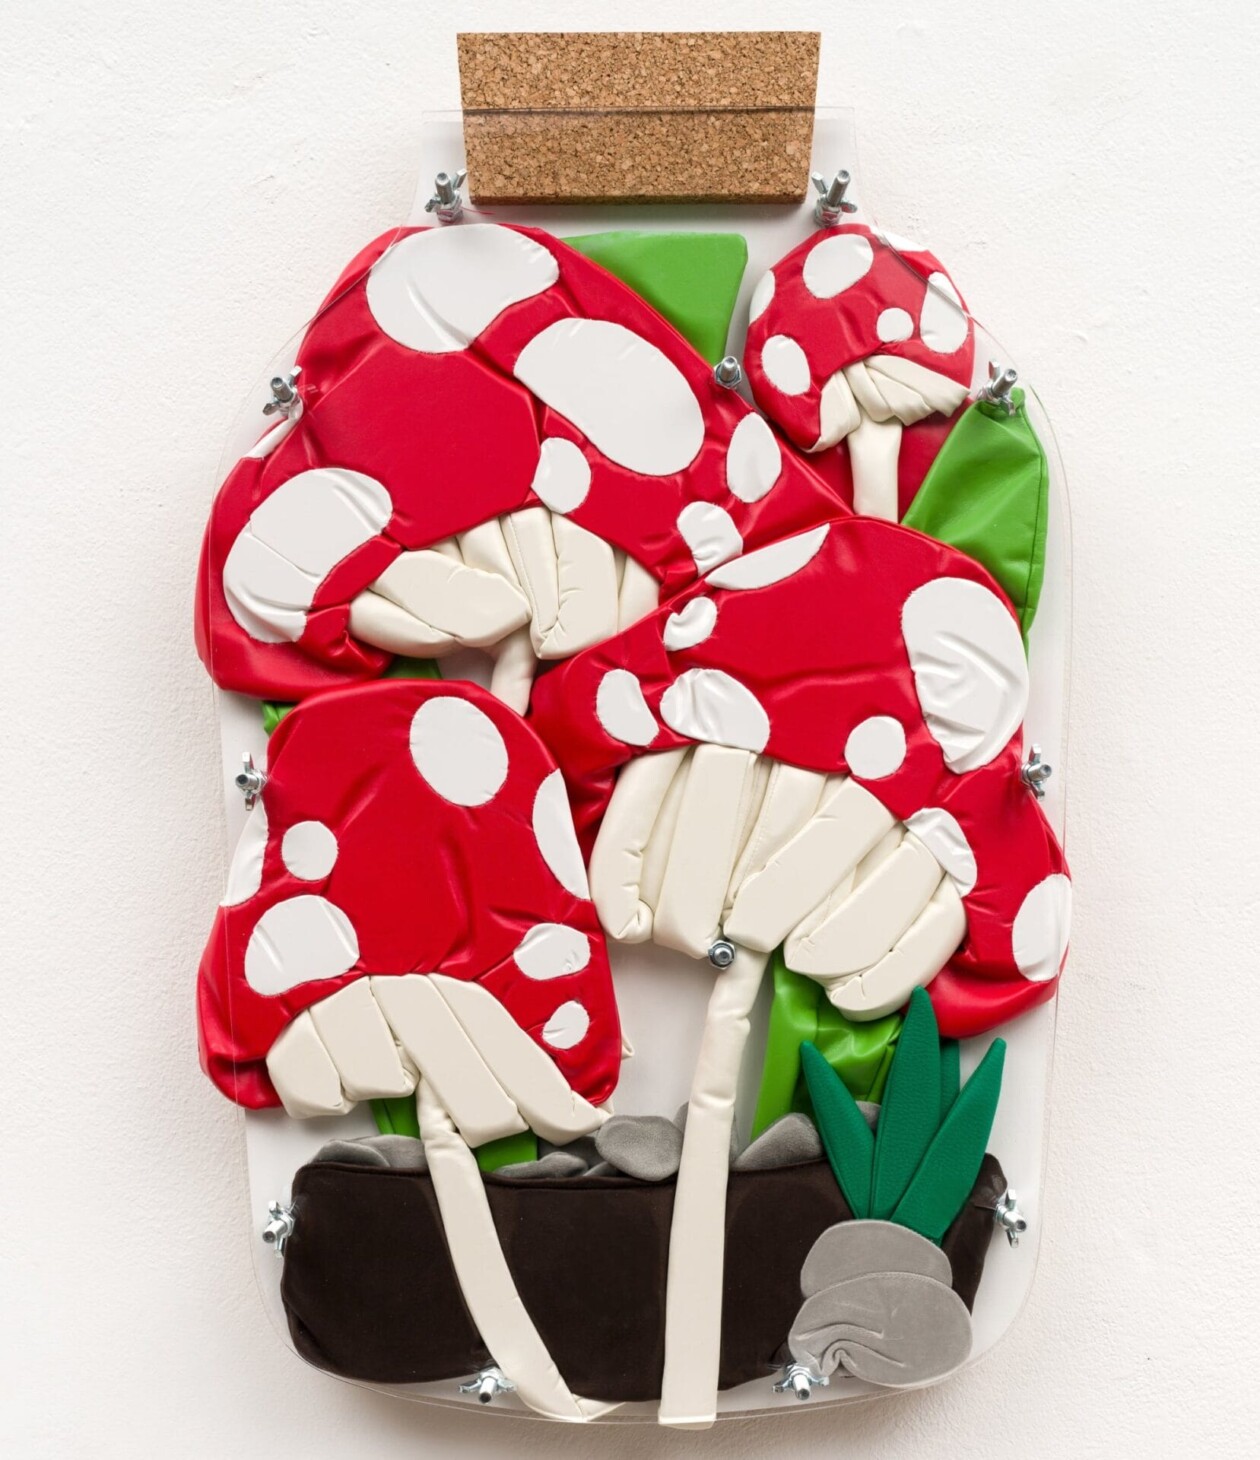 Claustrophobic, Acrylic Pressed Textile Plant Sculptures By Ant Hamlyn (12)